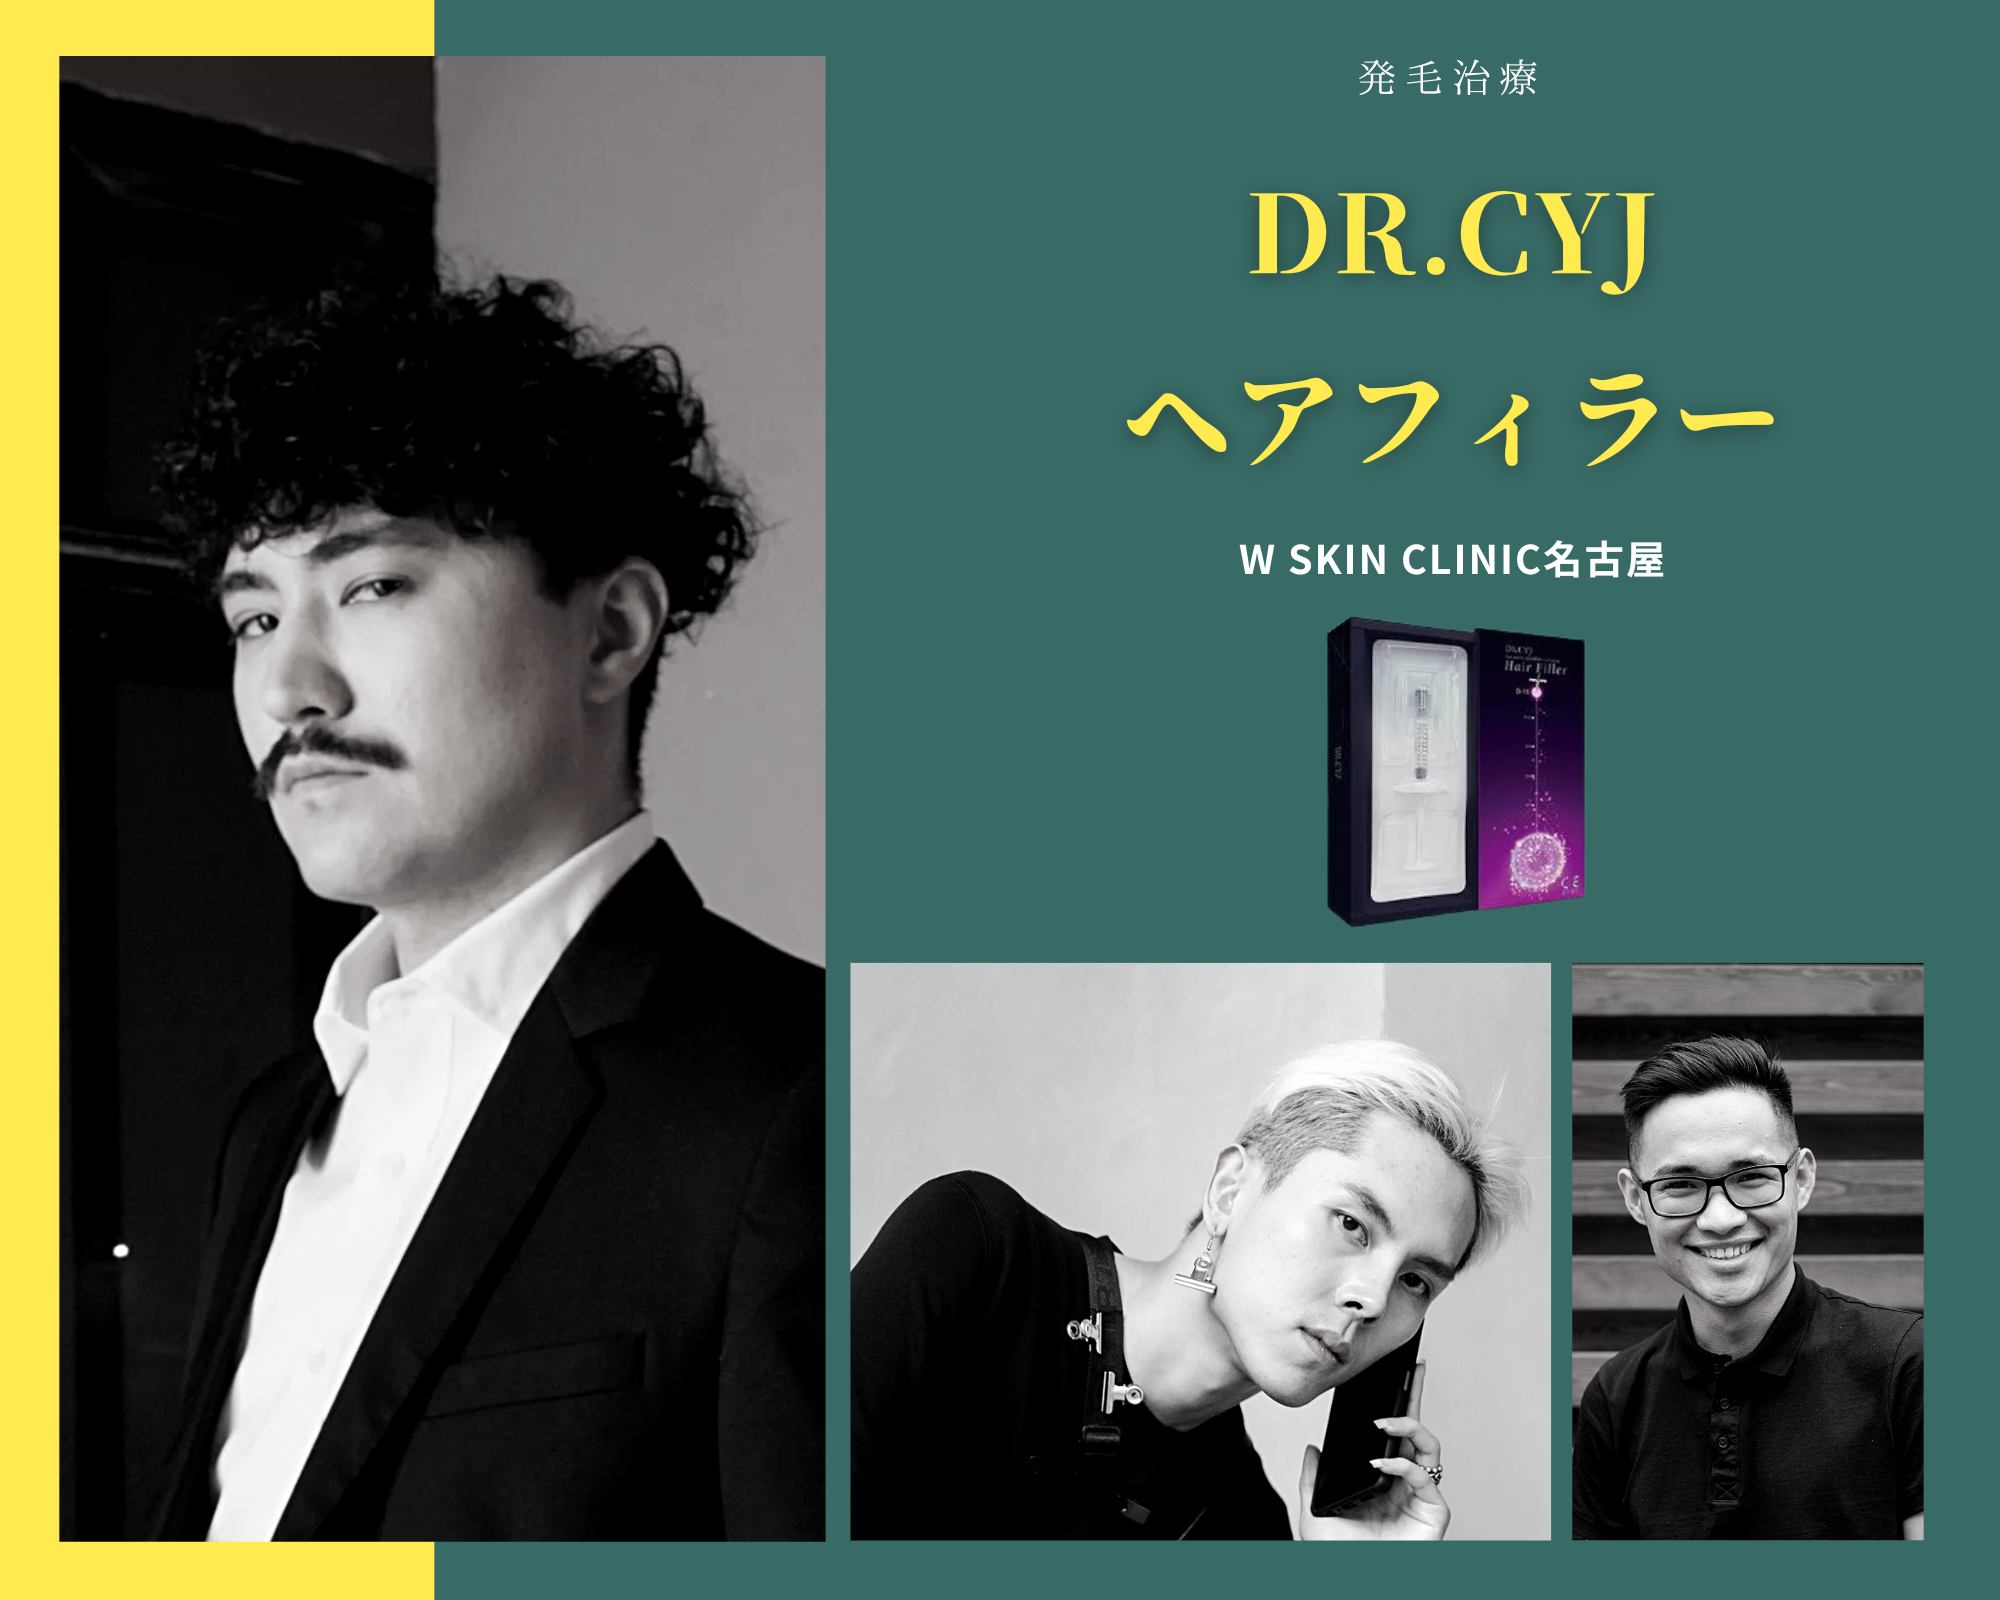 Dr.CYJヘアーフィラーの特徴、メカニズム、効果、他剤との比較について、名古屋の美容皮膚科医が解説